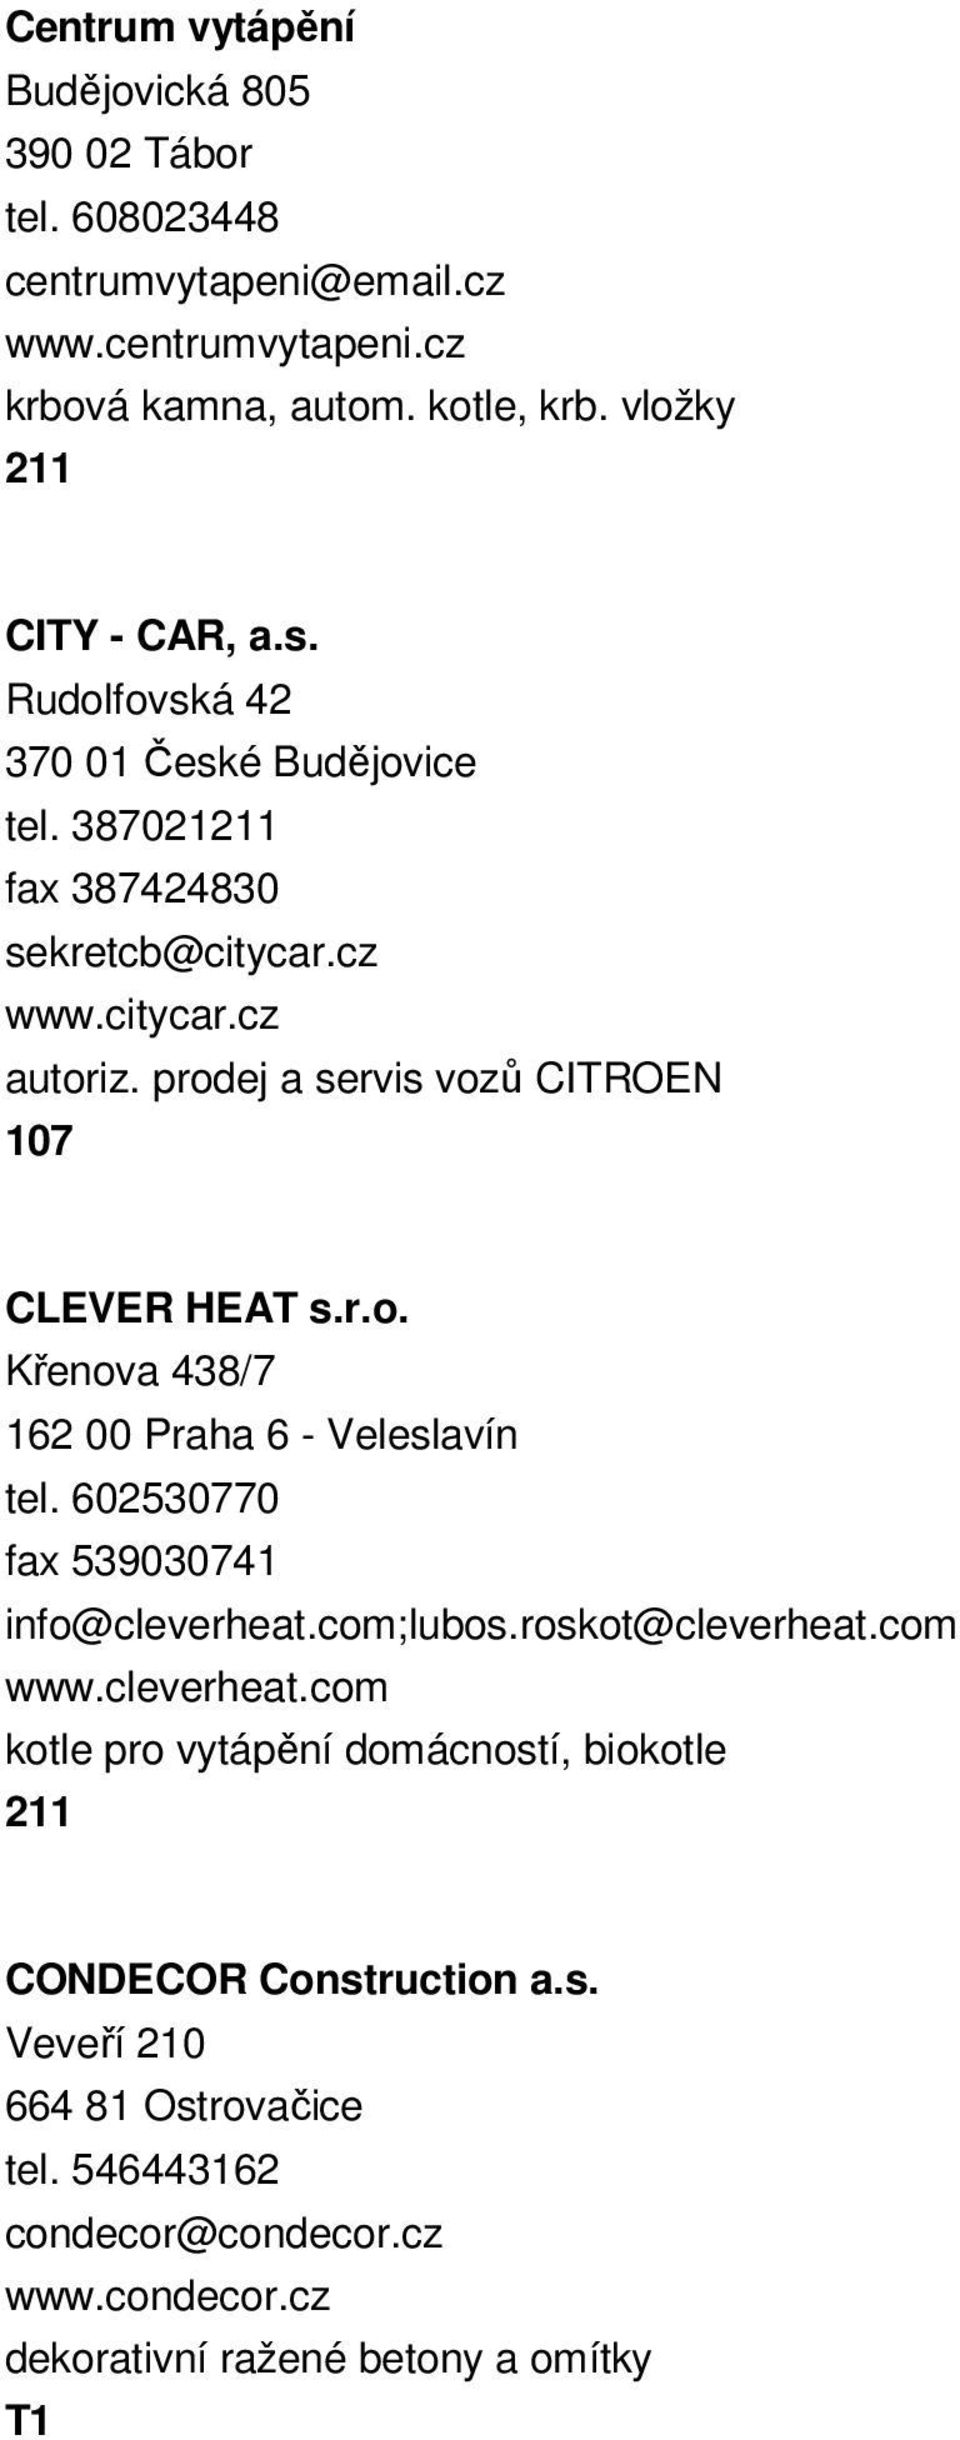 prodej a servis vozů CITROEN 107 CLEVER HEAT s.r.o. Křenova 438/7 162 00 Praha 6 - Veleslavín tel. 602530770 fax 539030741 info@cleverheat.com;lubos.